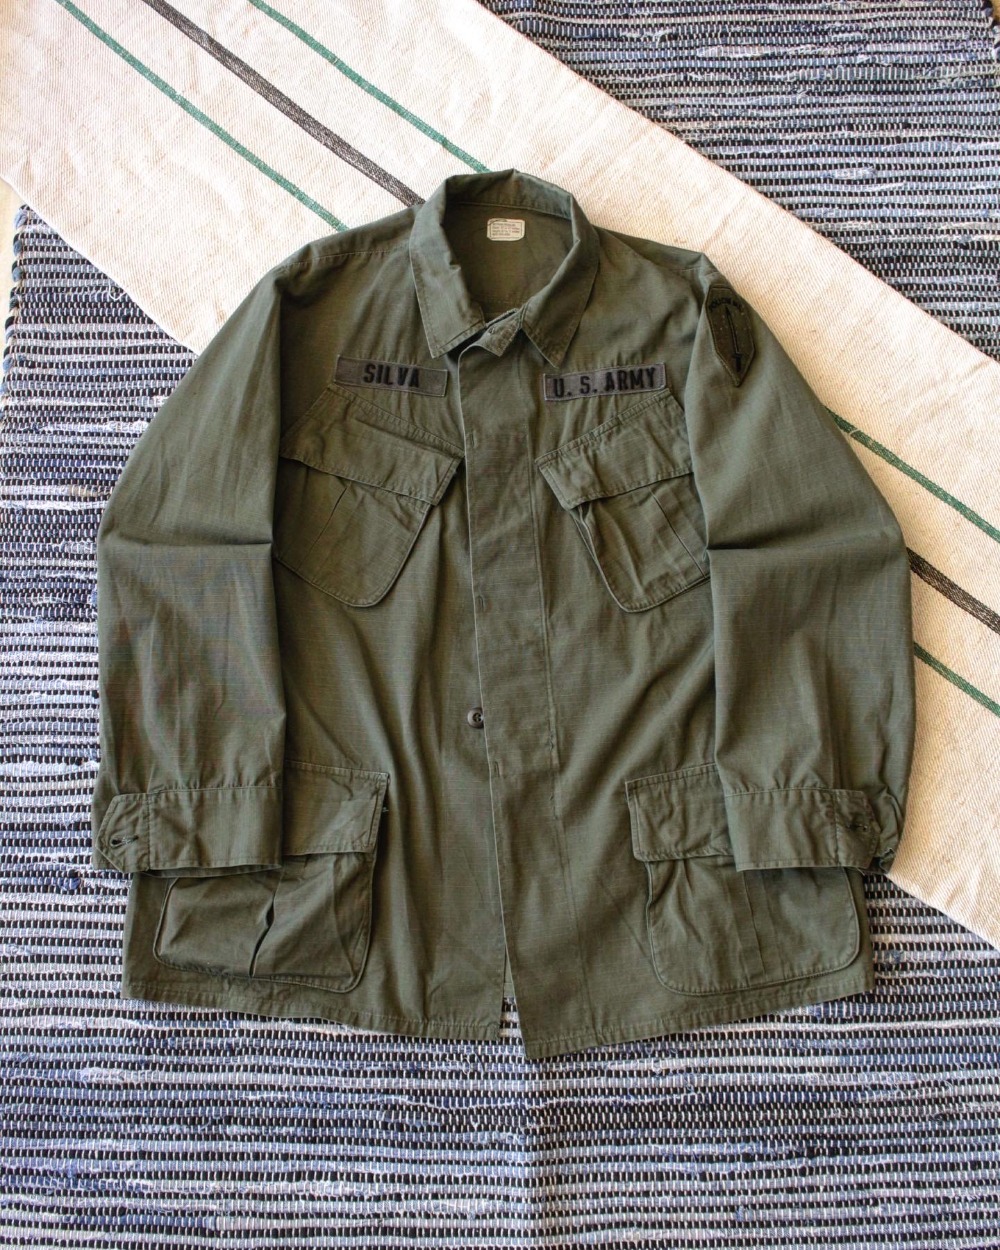 Rare 1970 US.ARMY Tropical Jungle Jacket (loose 100-105size)